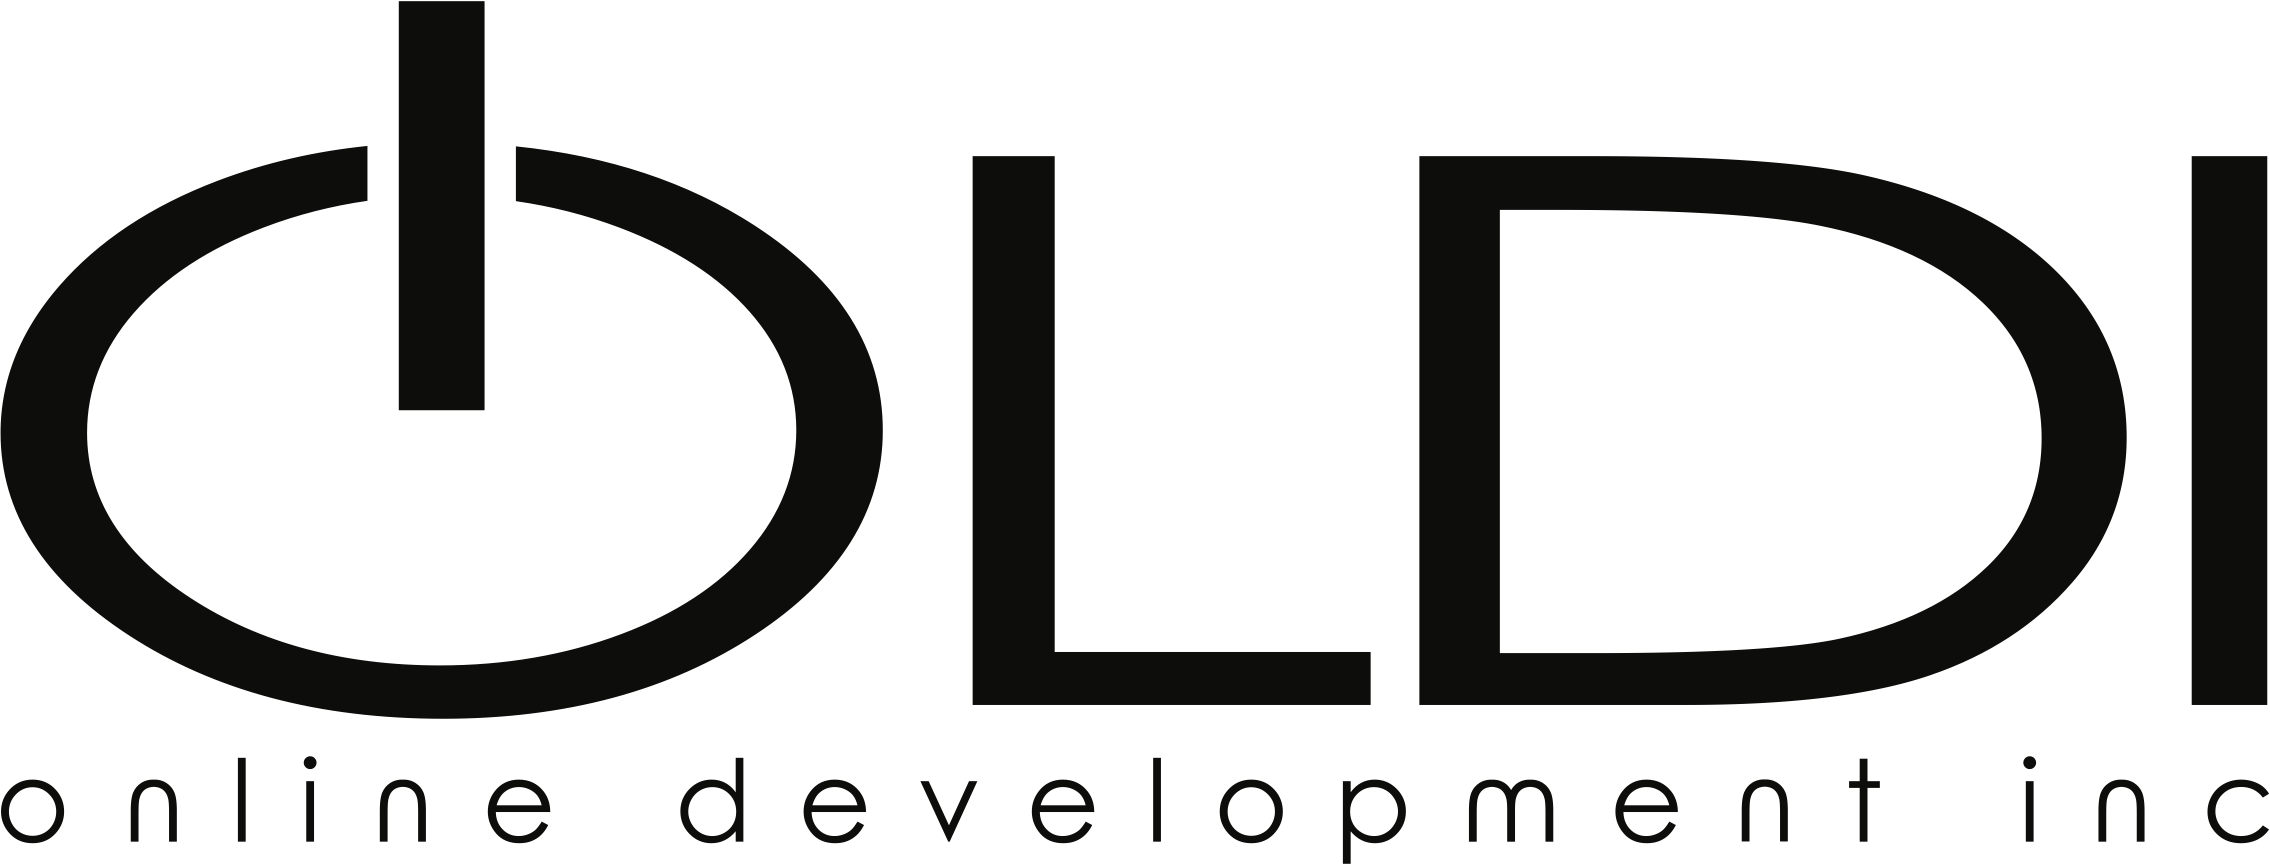 online development-logo